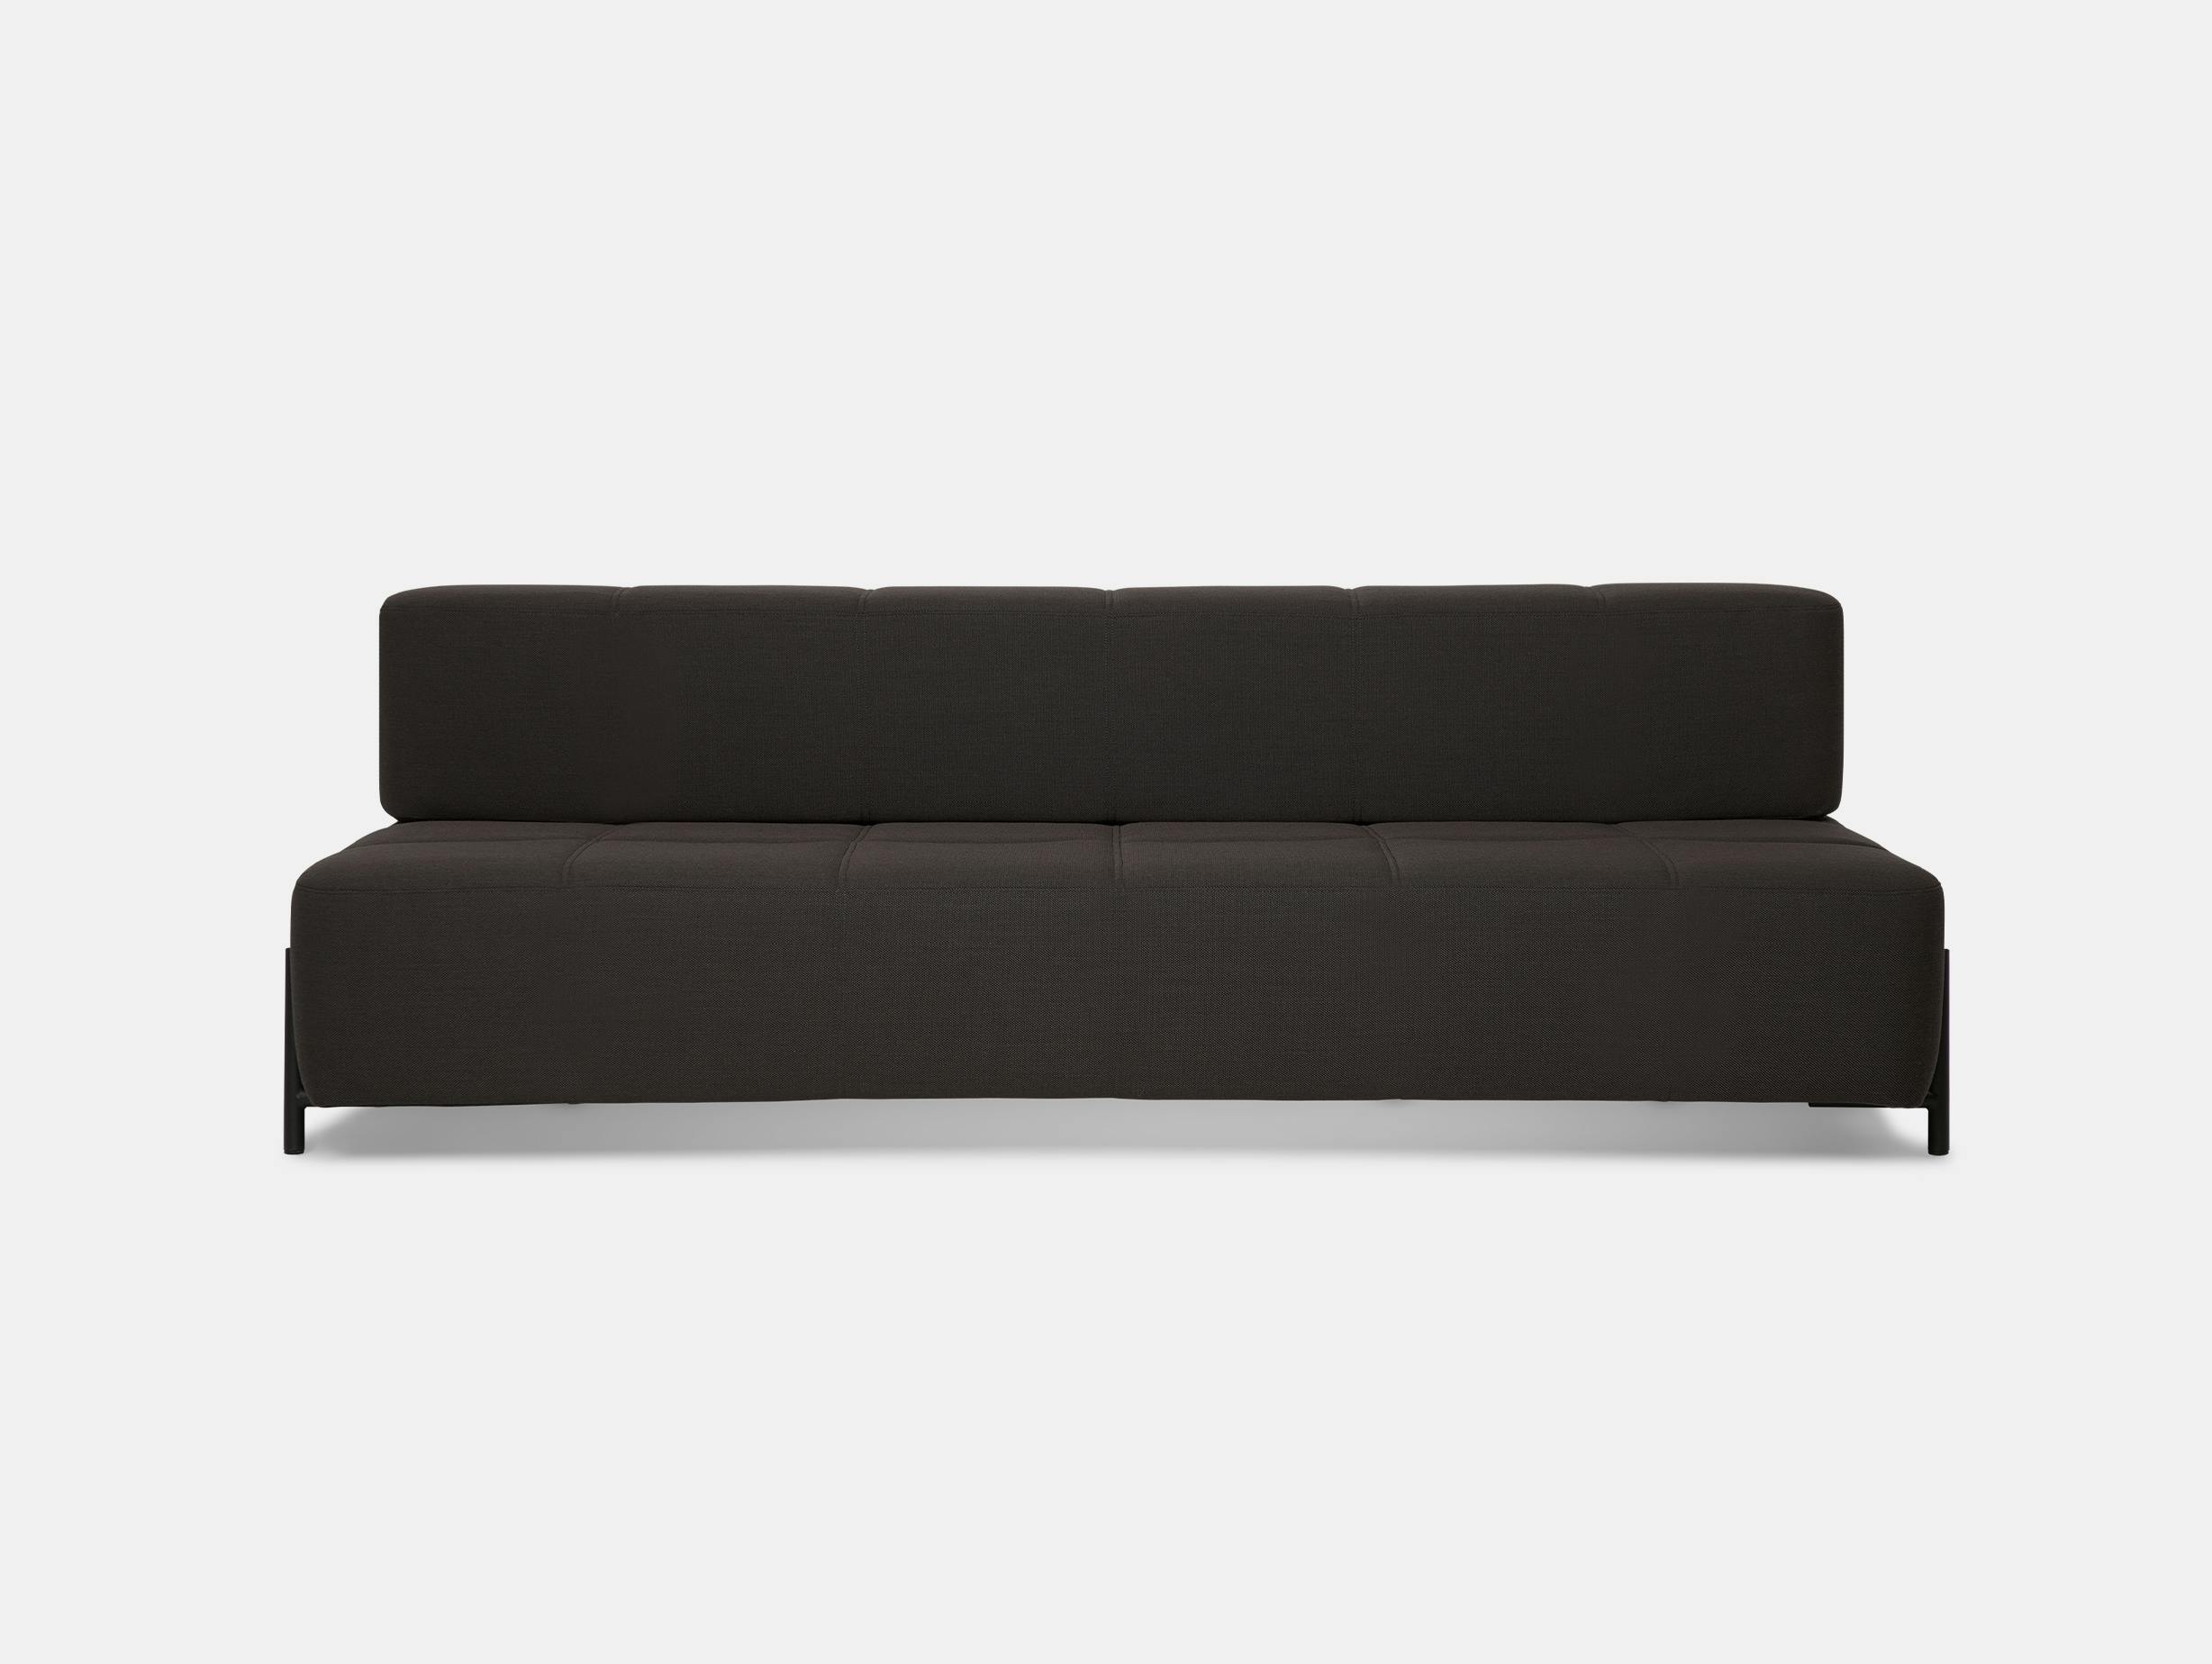 Northern daybe sofa bed dark grey